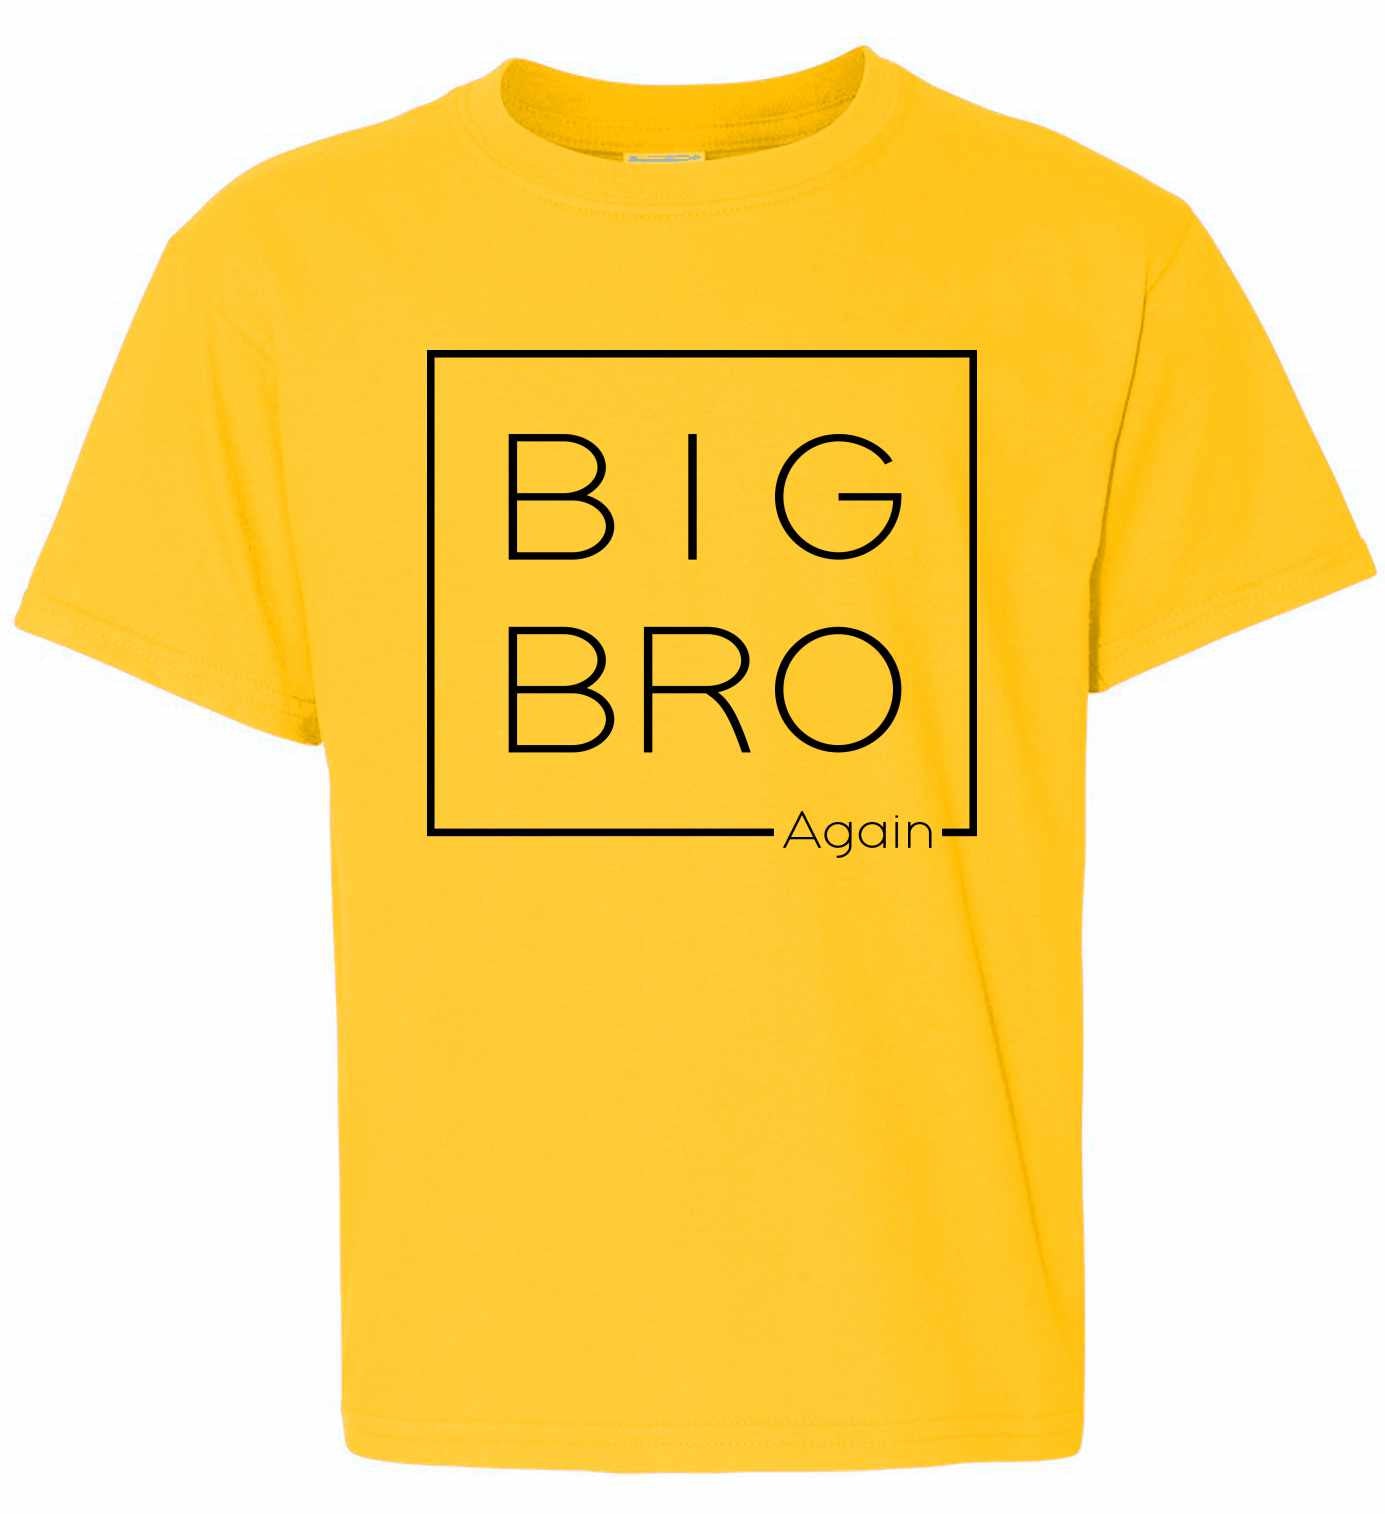 Big Bro Again- Big Brother Box on Kids T-Shirt